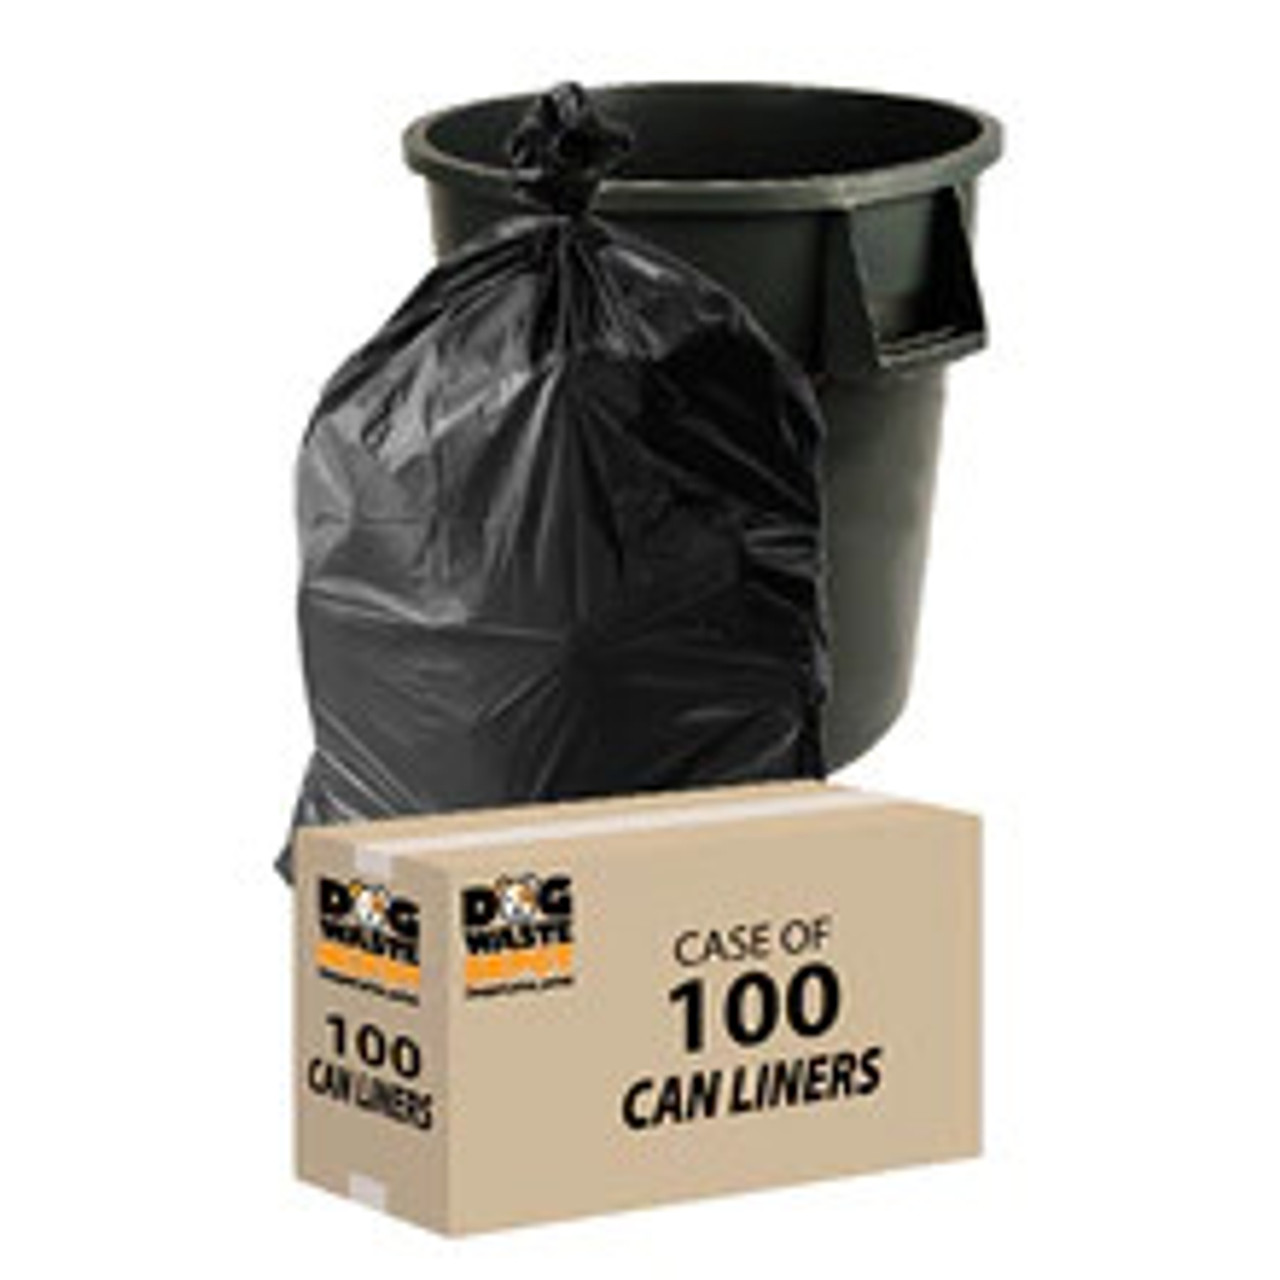 Compostable 55 Gallon Trash Can Liner